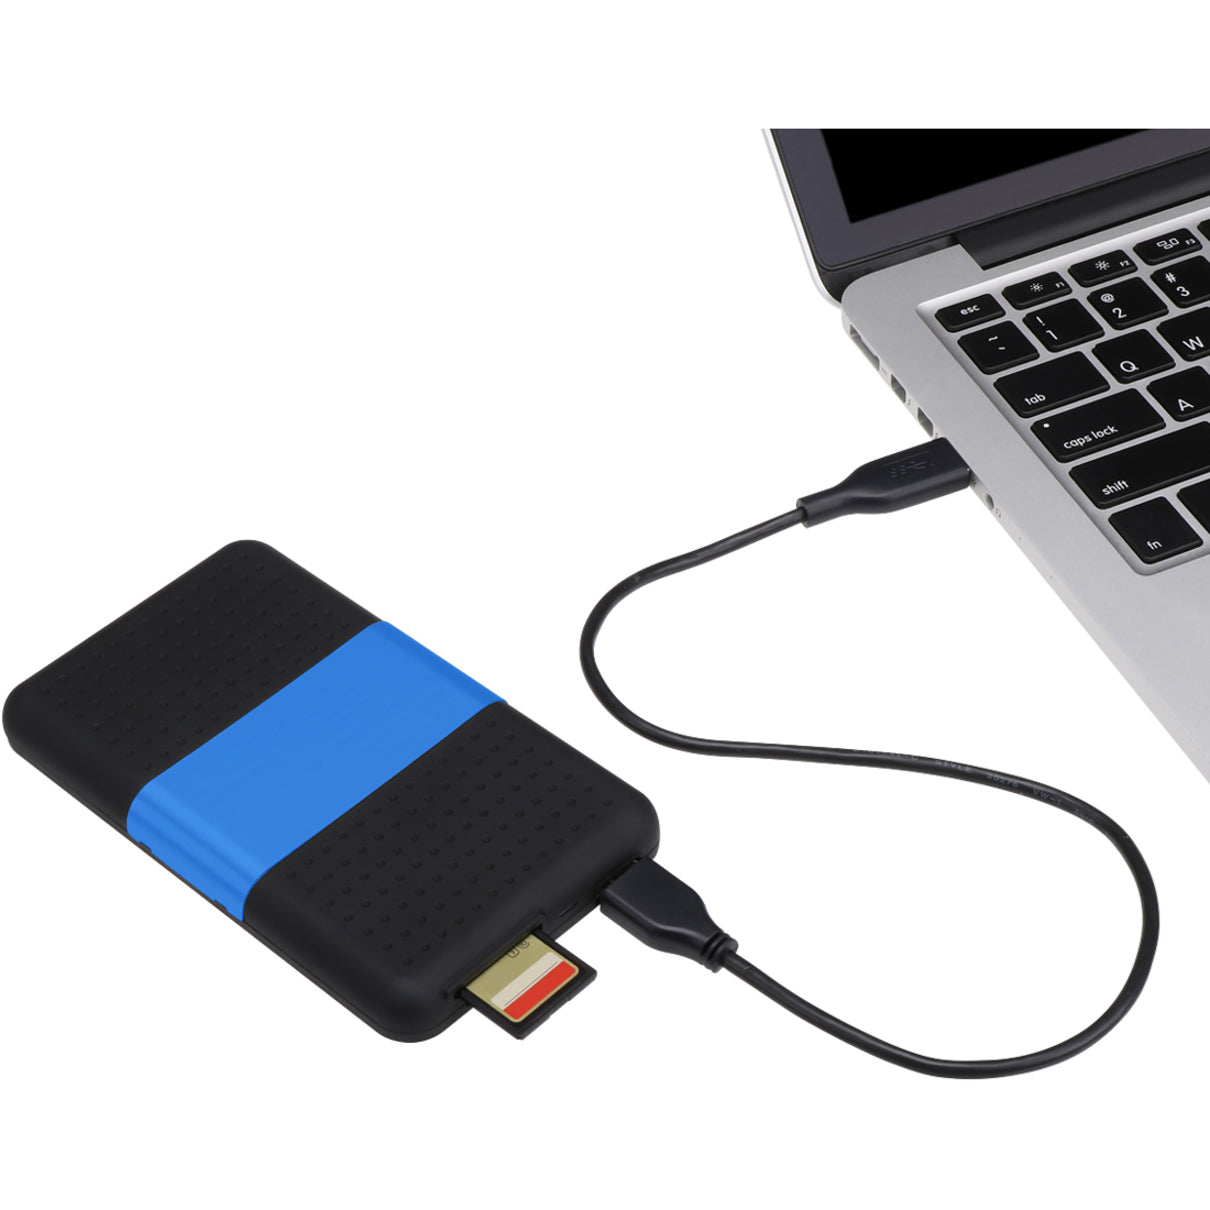 SIIG JU-SA0S12-S1 USB 3.0 to SATA Hard Drive with SD Reader Enclosure - 2.5", Adds More Storage Space